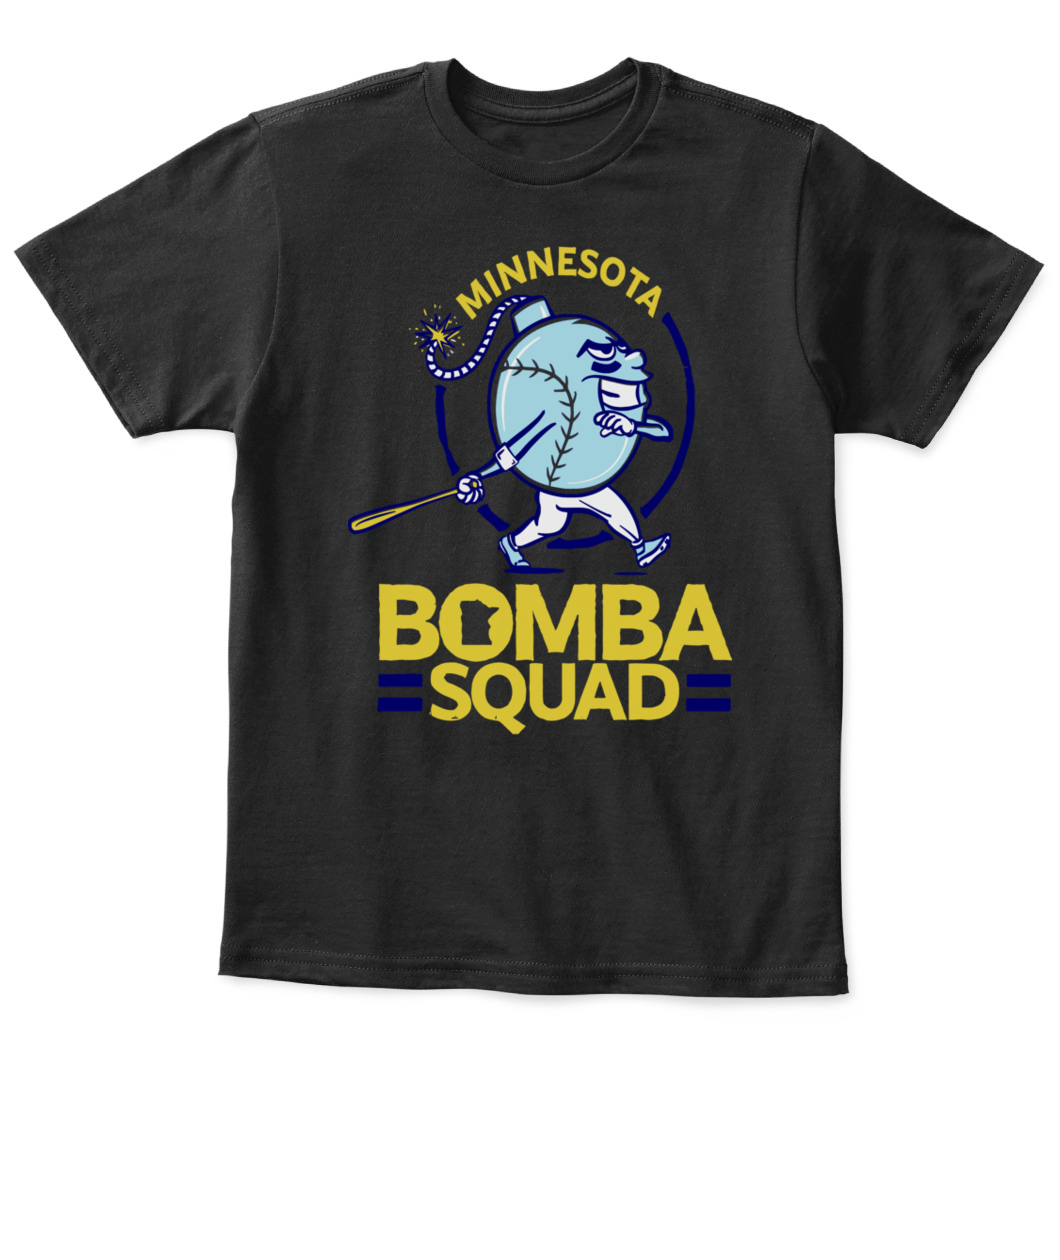 minnesota twins bomba squad shirt